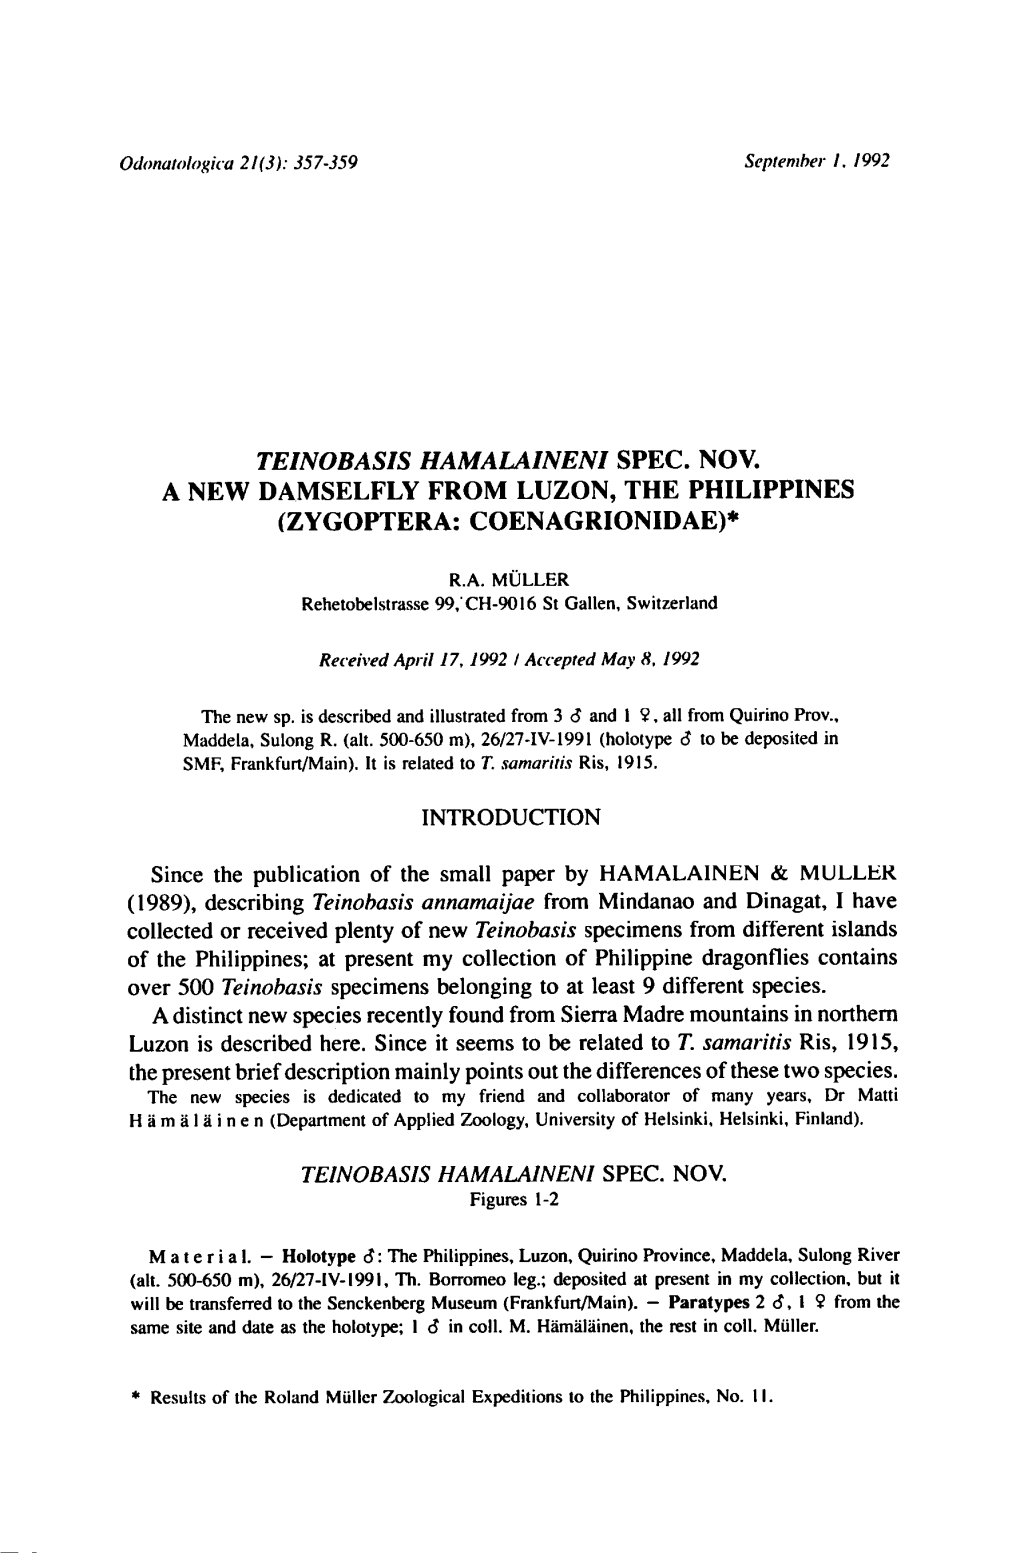 Coenagrionidae) Publication of (1989), Describing Teinobasis